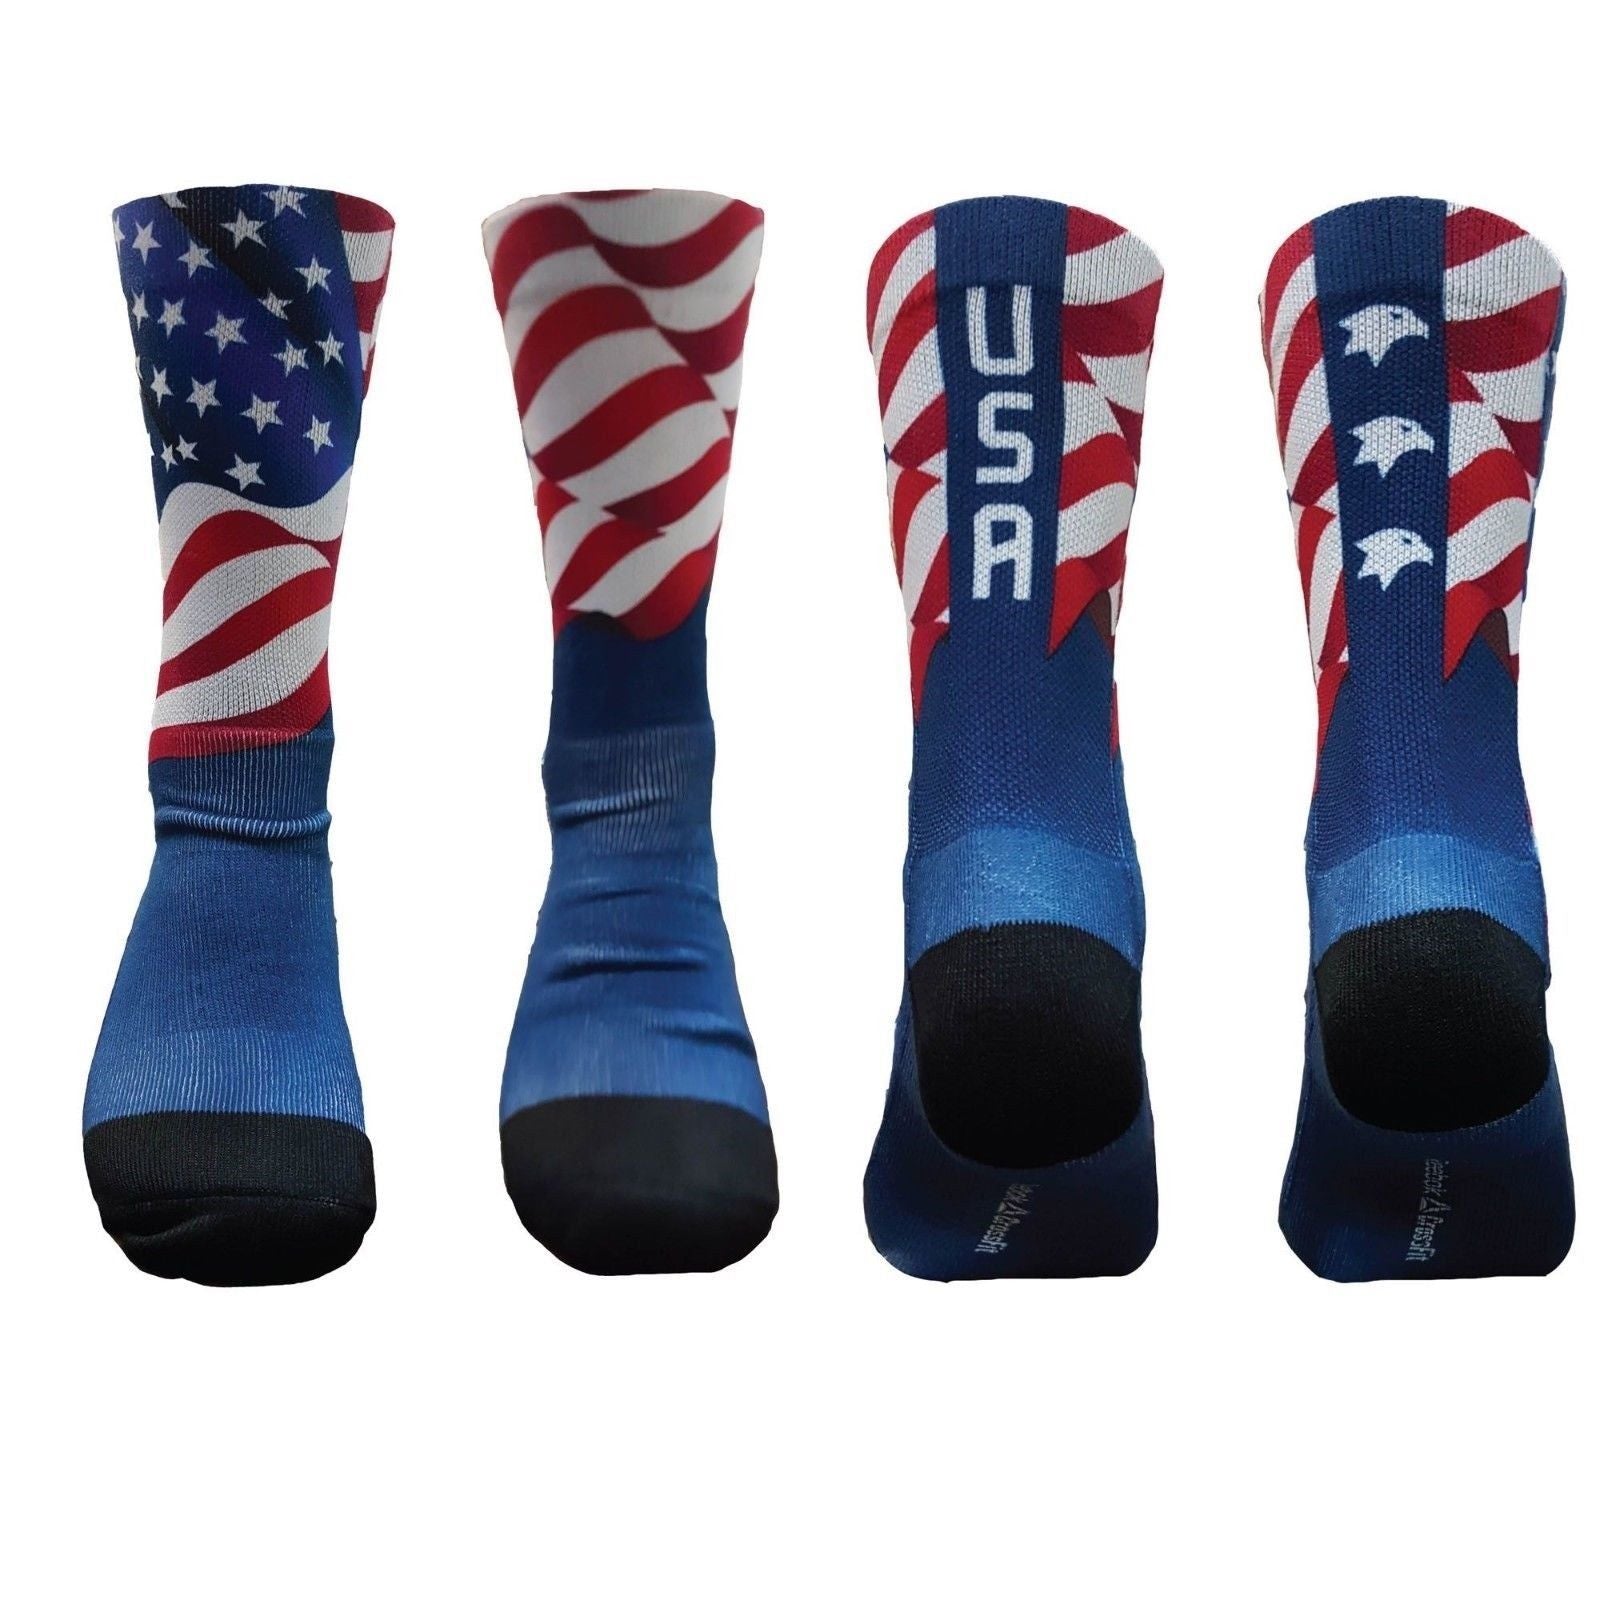 [BG8667] Reebok Crossfit USA Socks